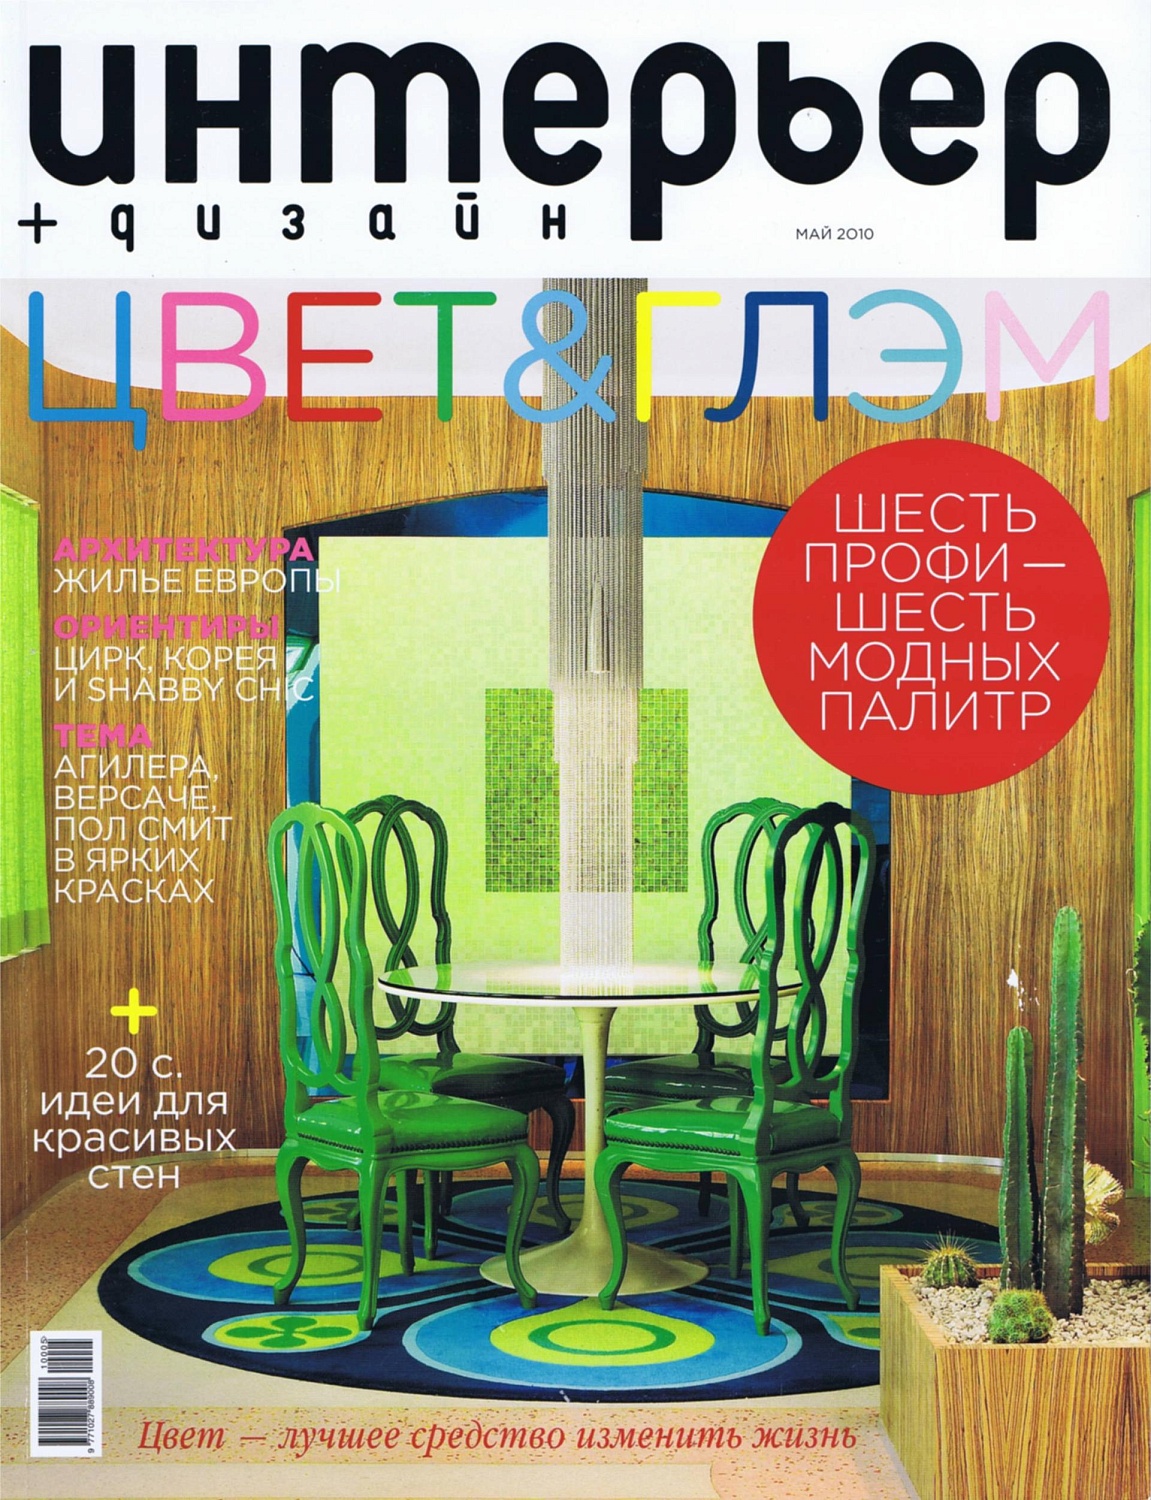 Журнал "ИНТЕРЬЕР+ДИЗАЙН" - "На воздухе" 2010